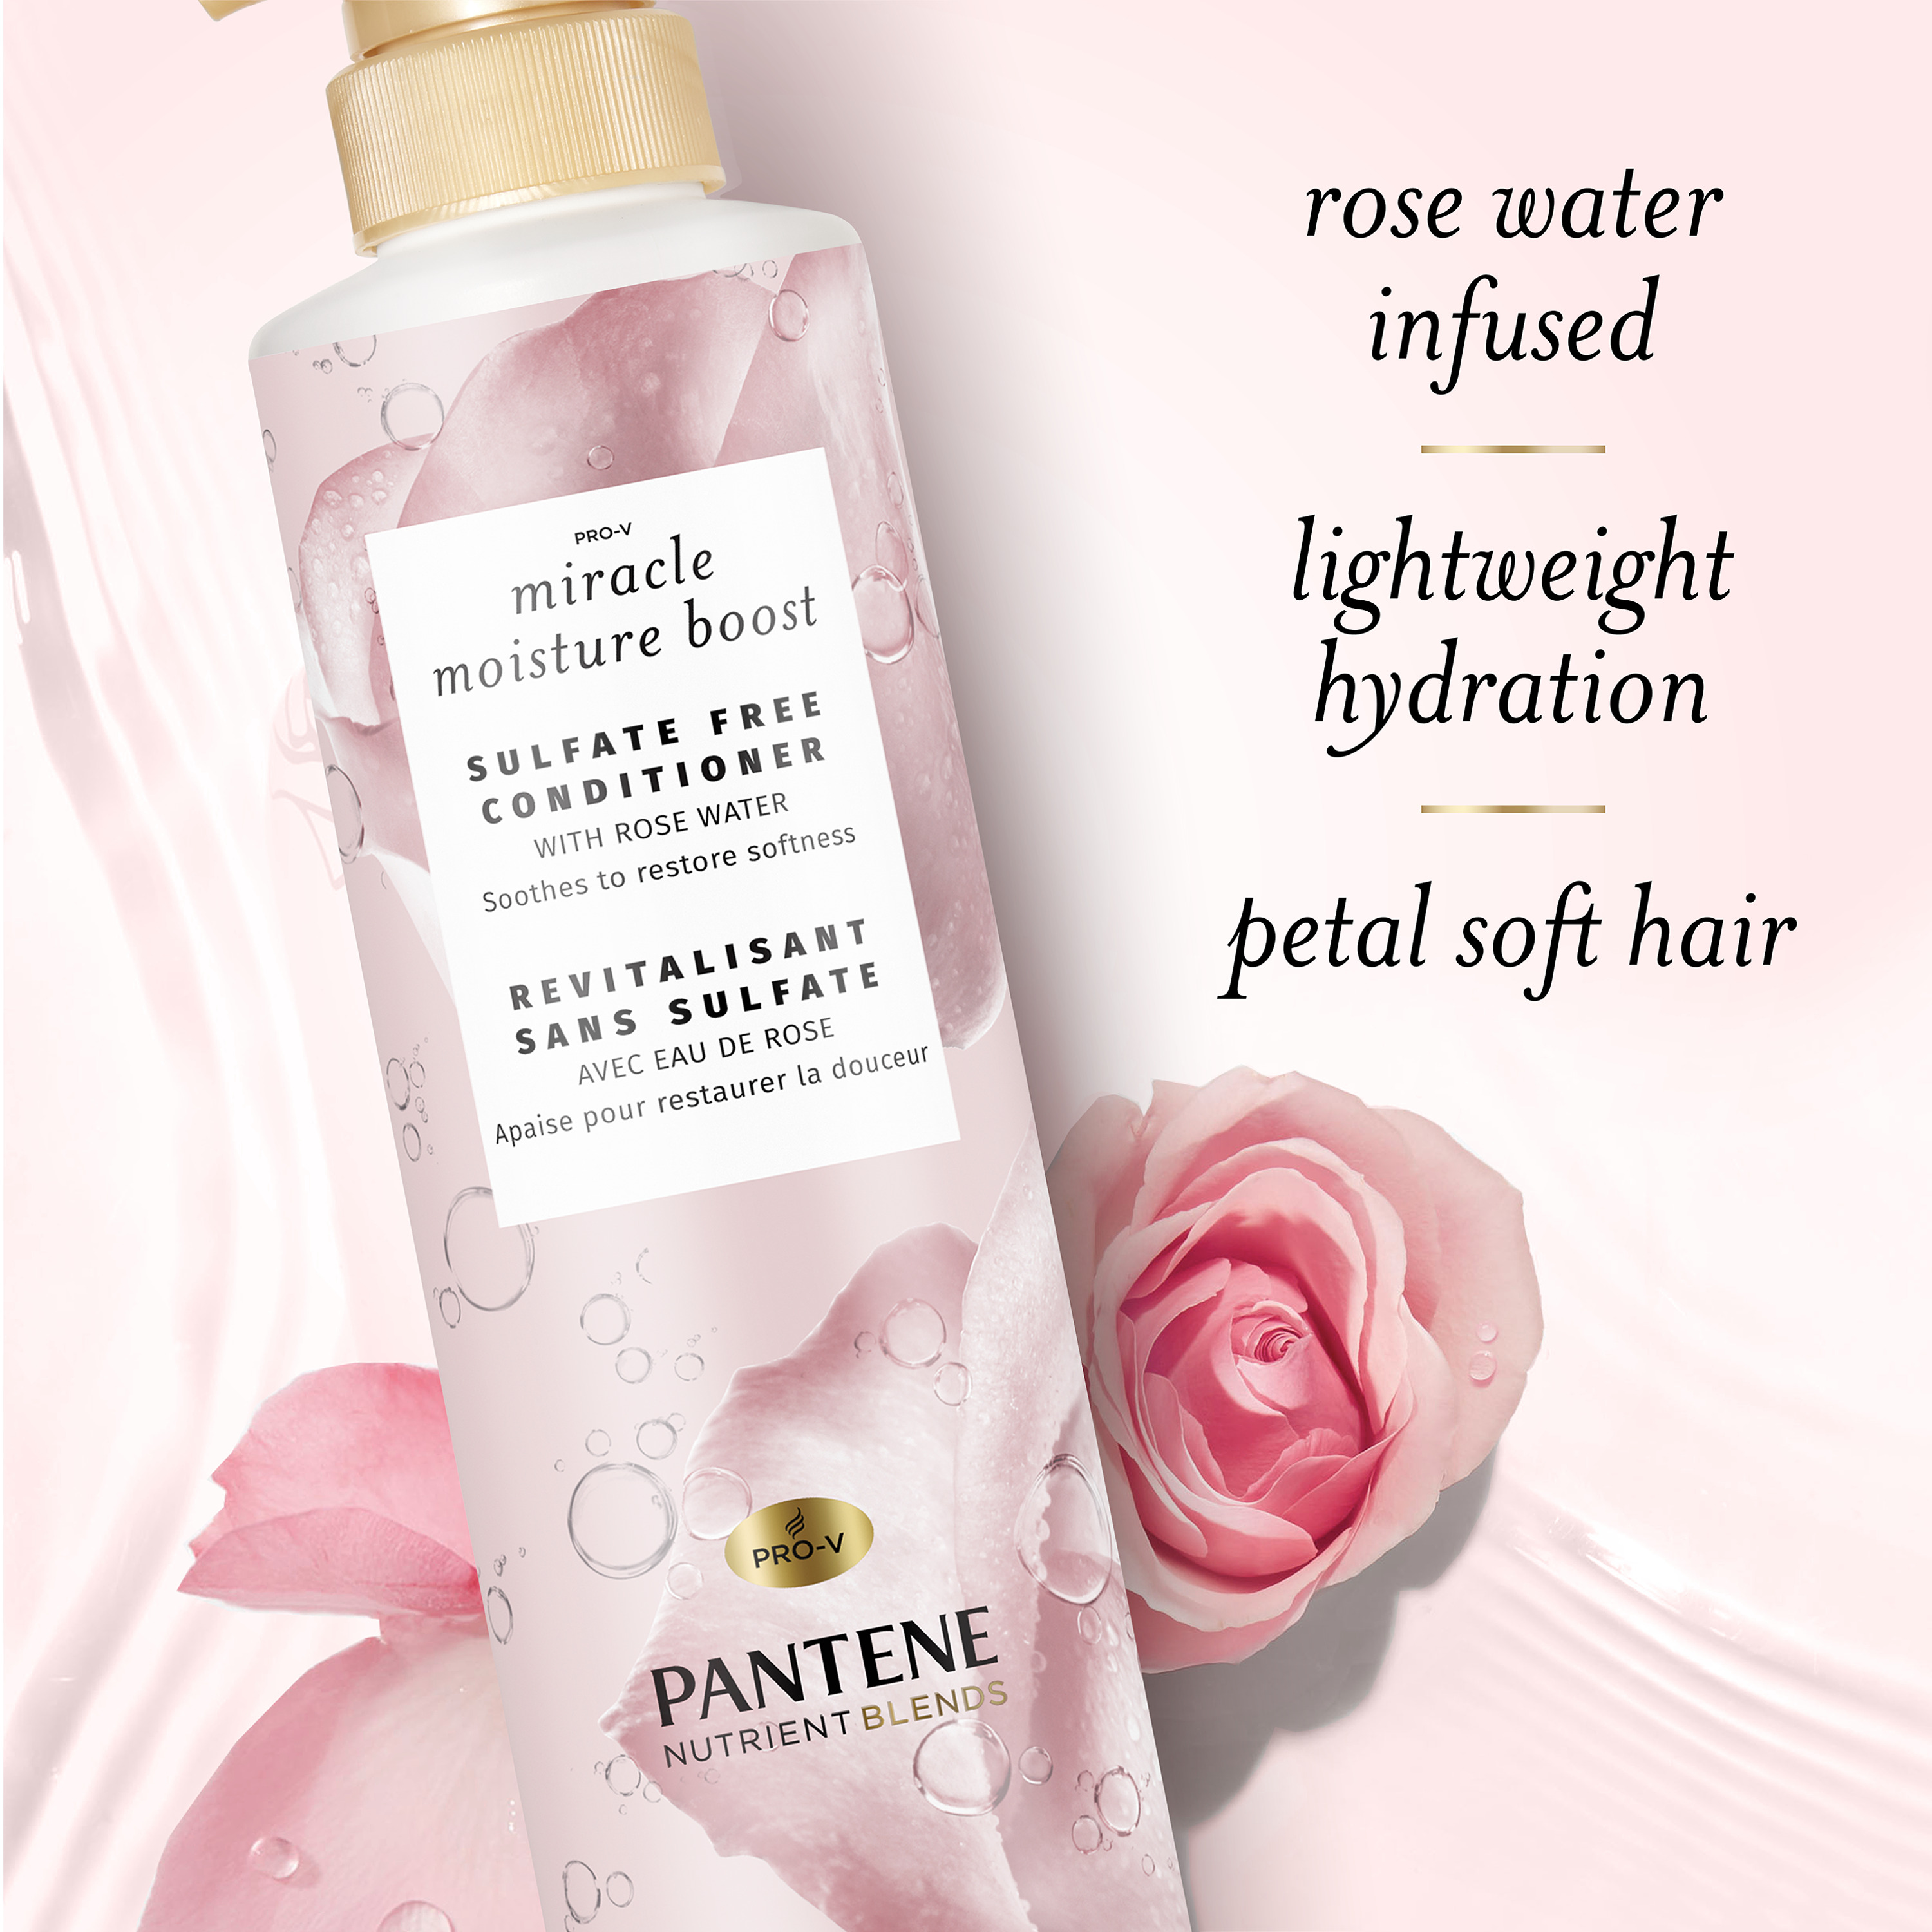 Pantene Nutrient Blends Shampoo, Moisture Boost Rose Water, 9.6 fl oz - image 5 of 10